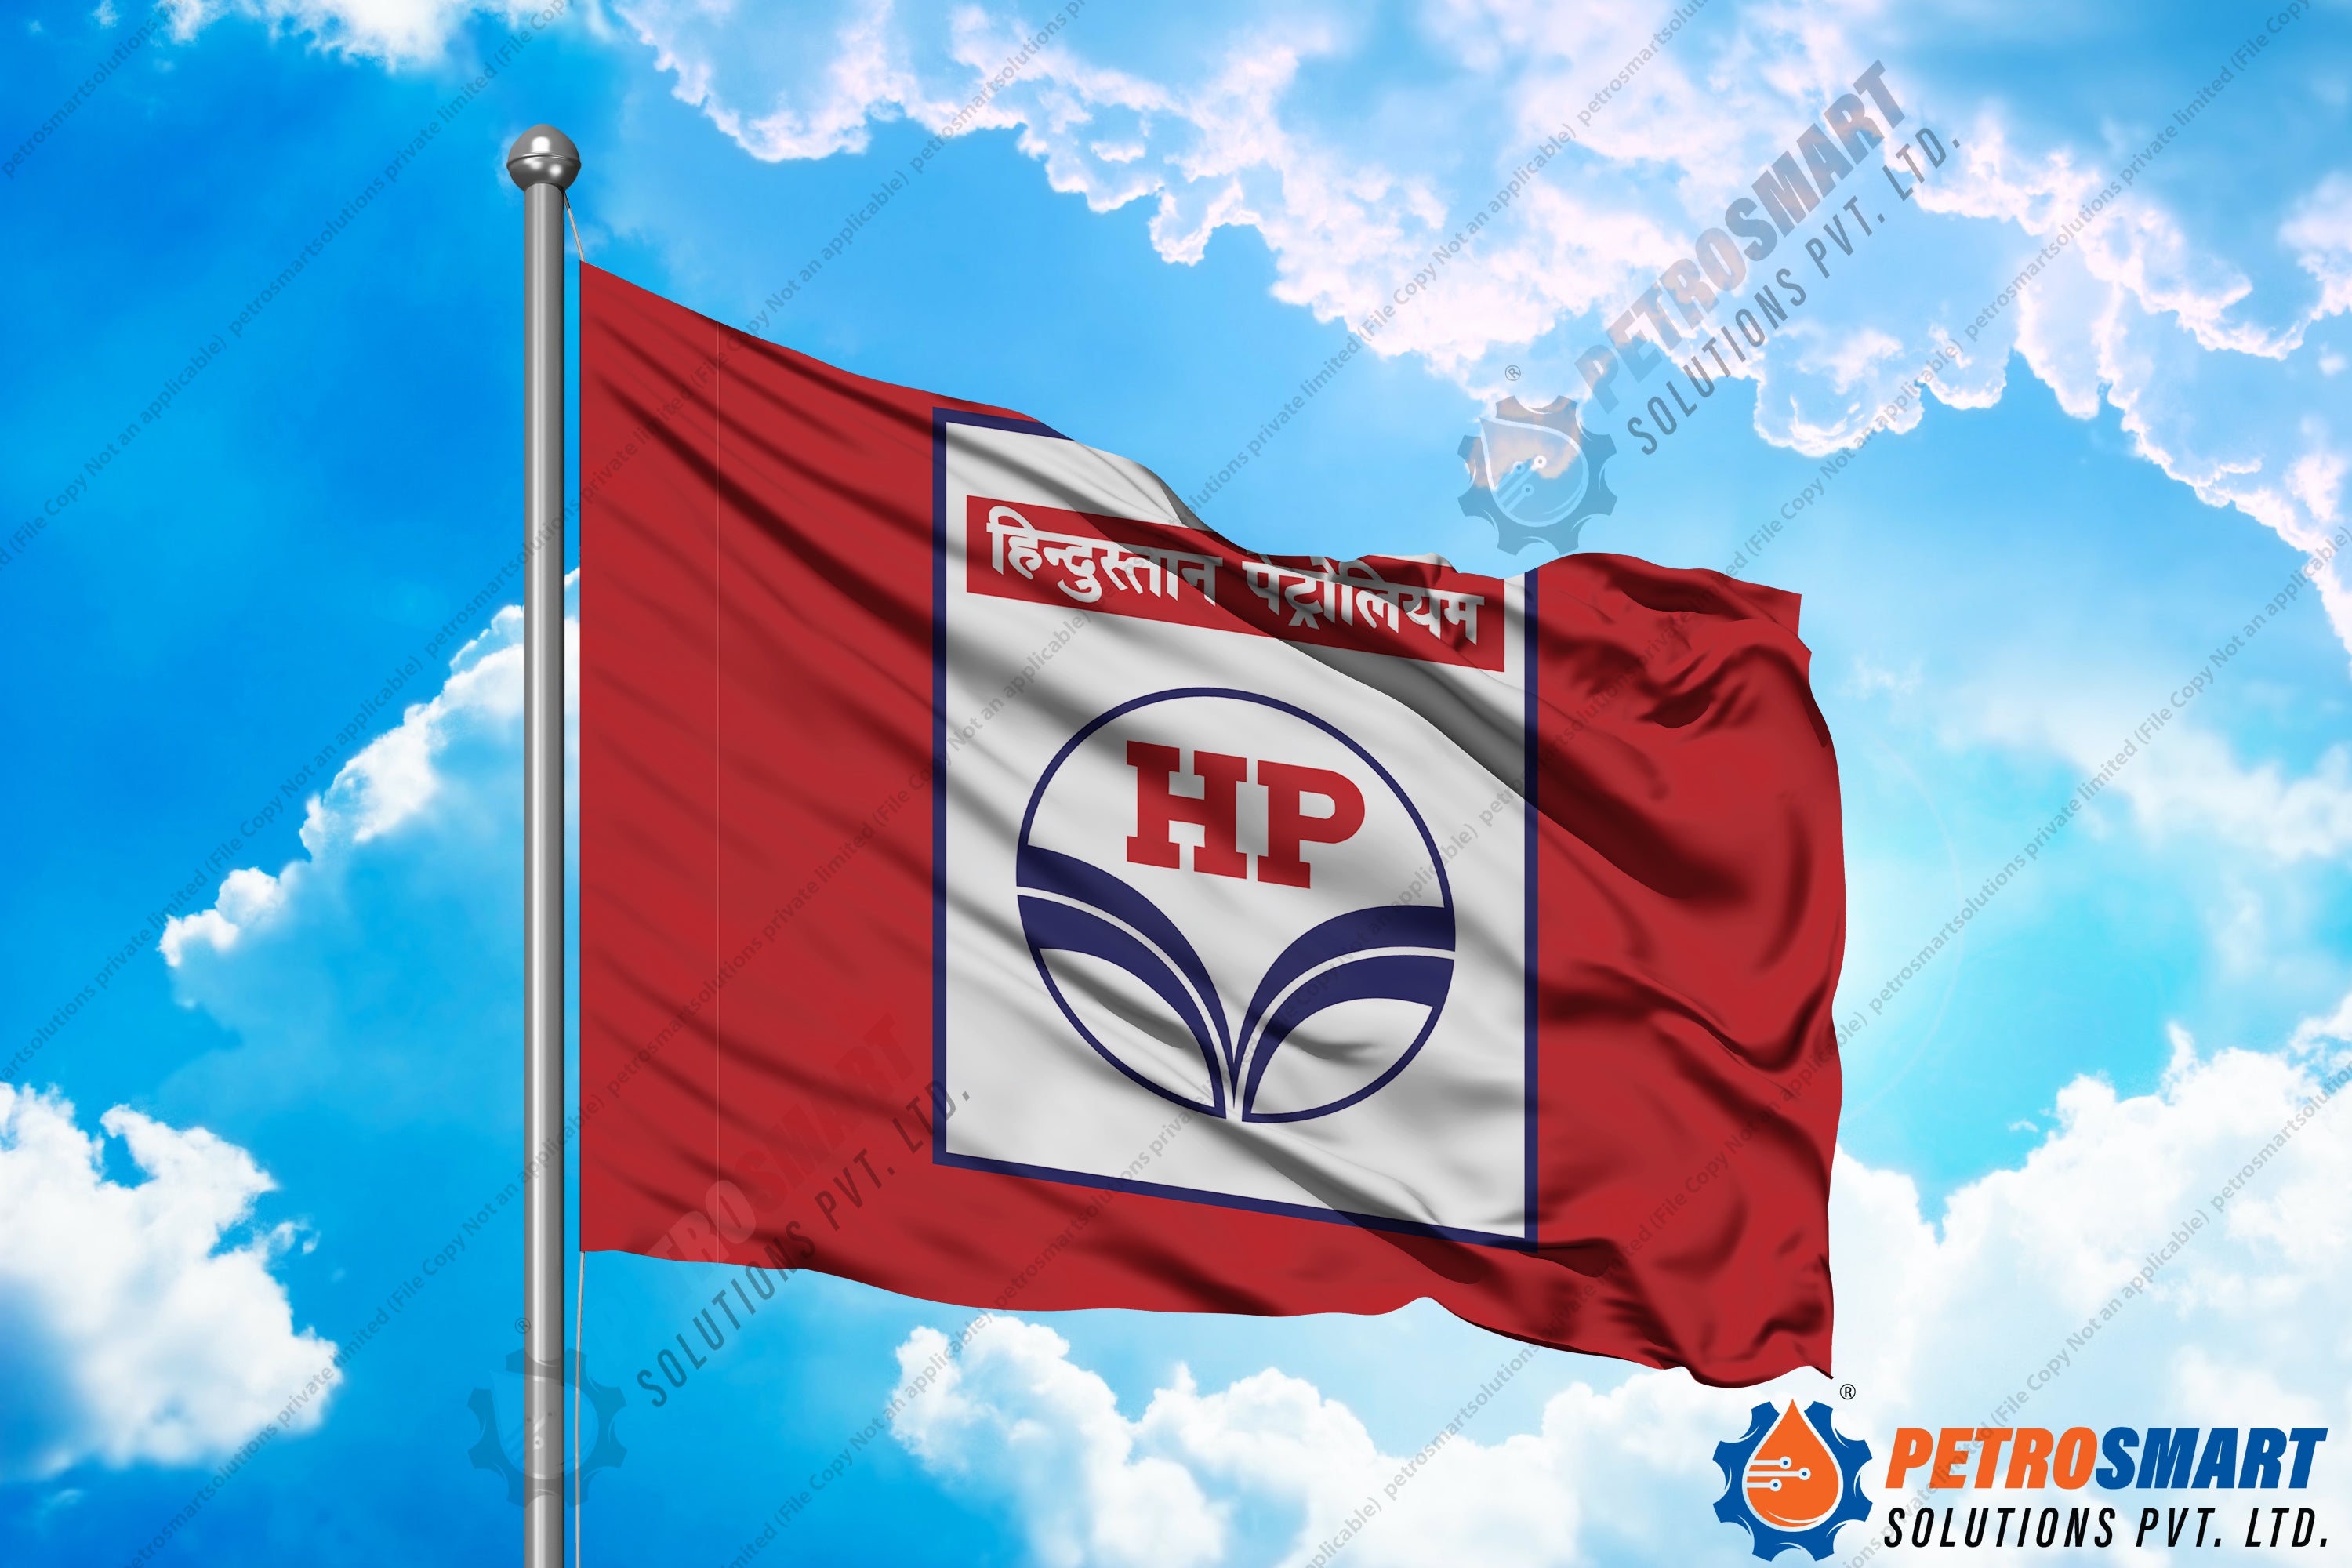 Image of HP petrol Bunk-DQ789228-Picxy